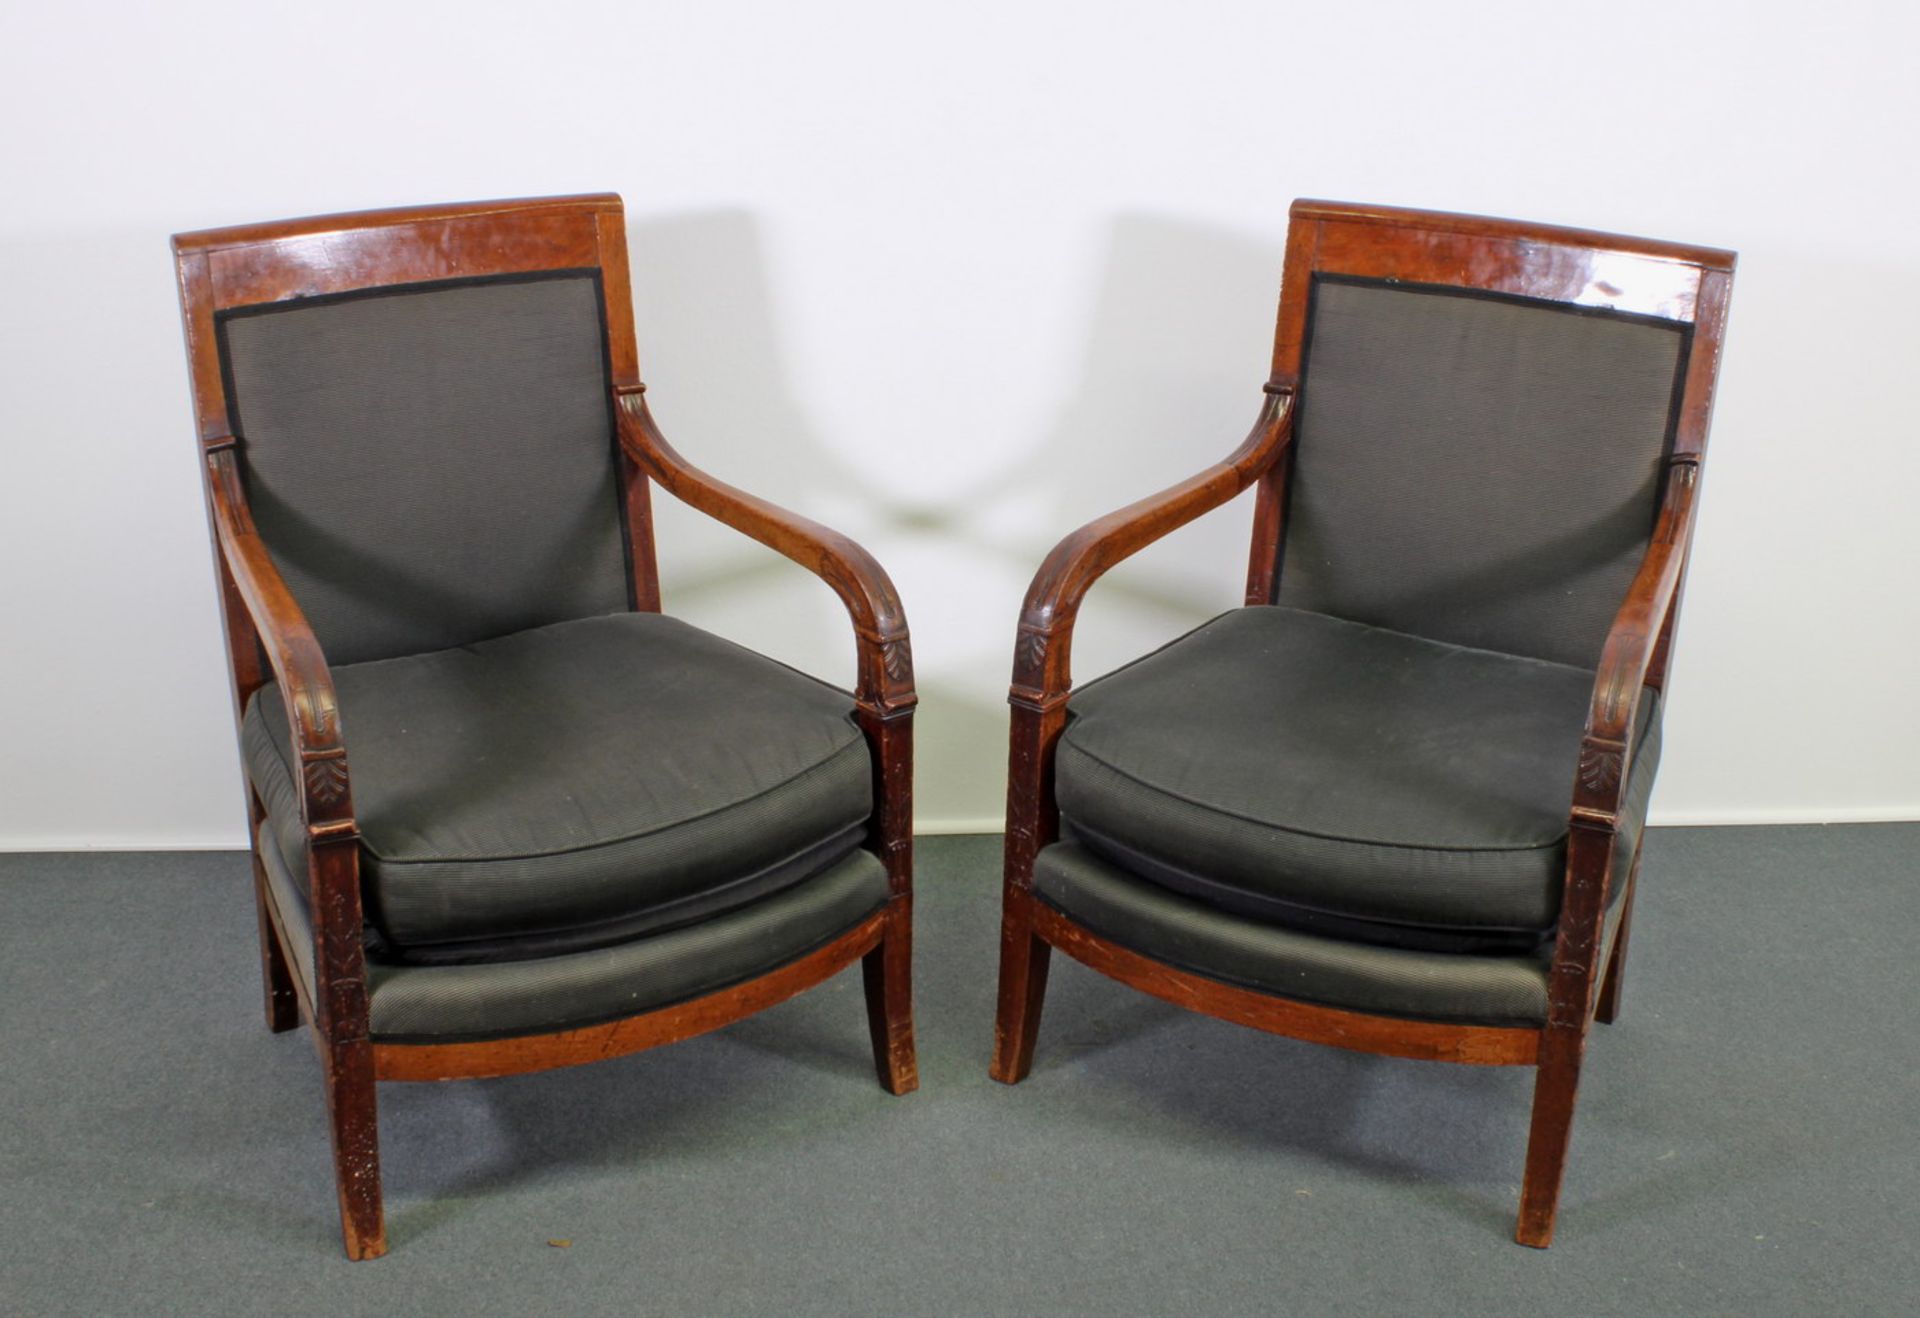 Paar Kaminsessel, Biedermeier, um 1825, Mahagoni, erneuerte Sitz- und Rückenpolster, lose